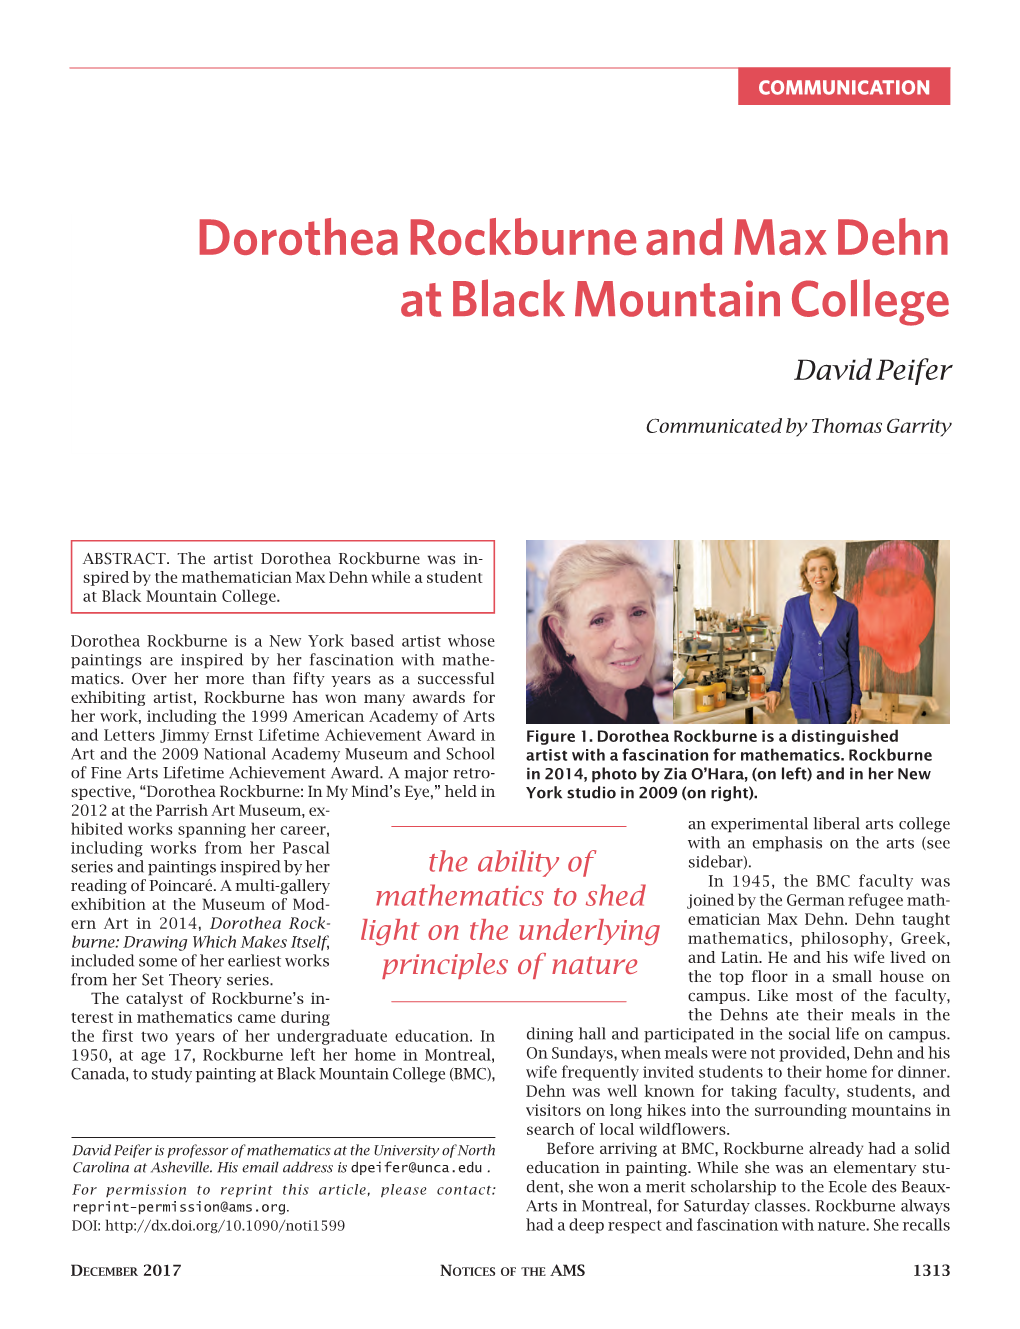 Dorothea Rockburne and Max Dehn at Black Mountain College